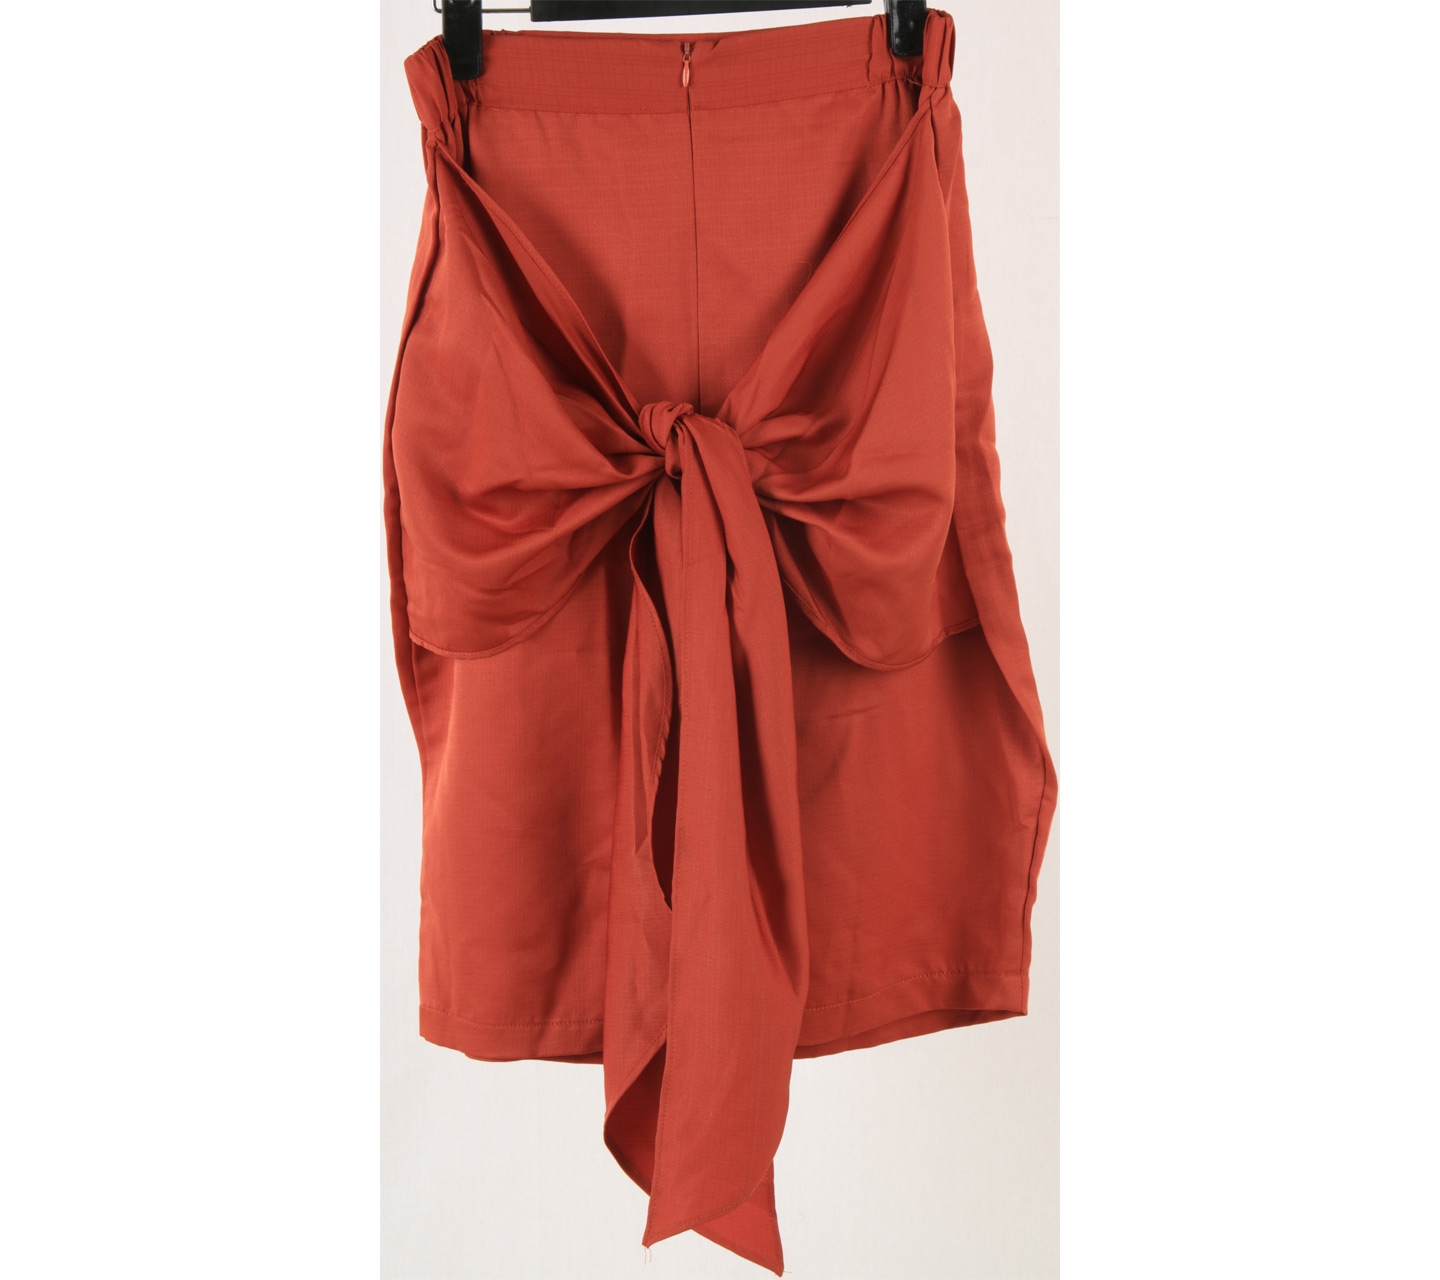 VOW Orange Tied Skirt